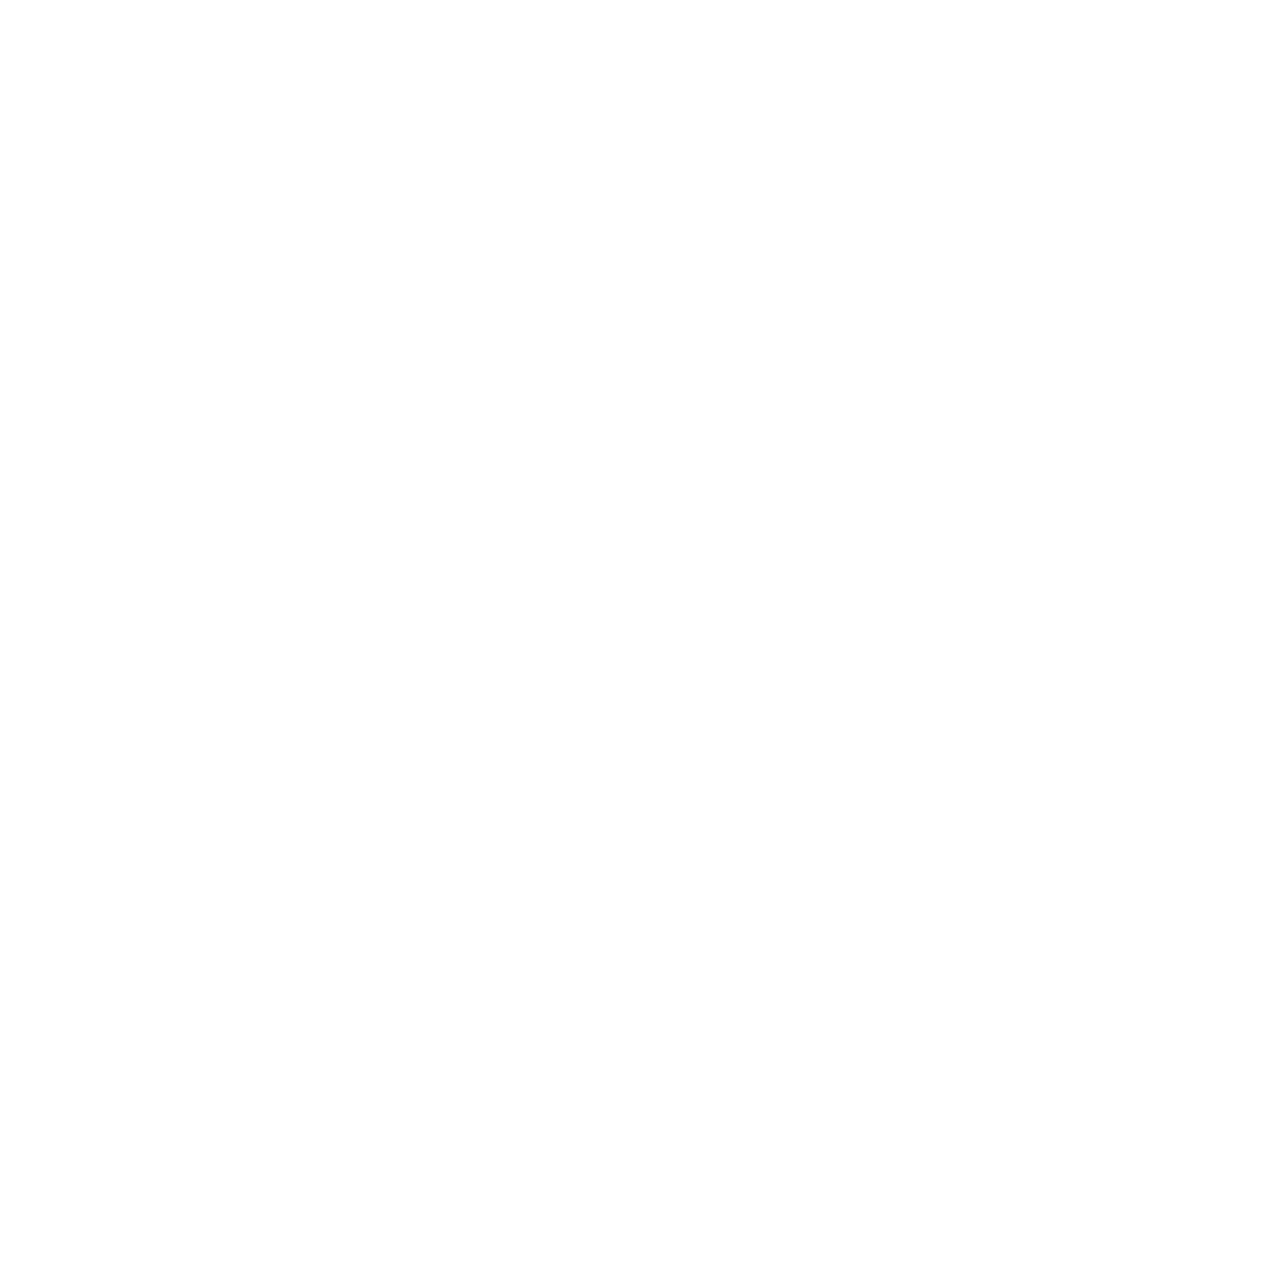 Avata 2 (Один дрон) комплектация